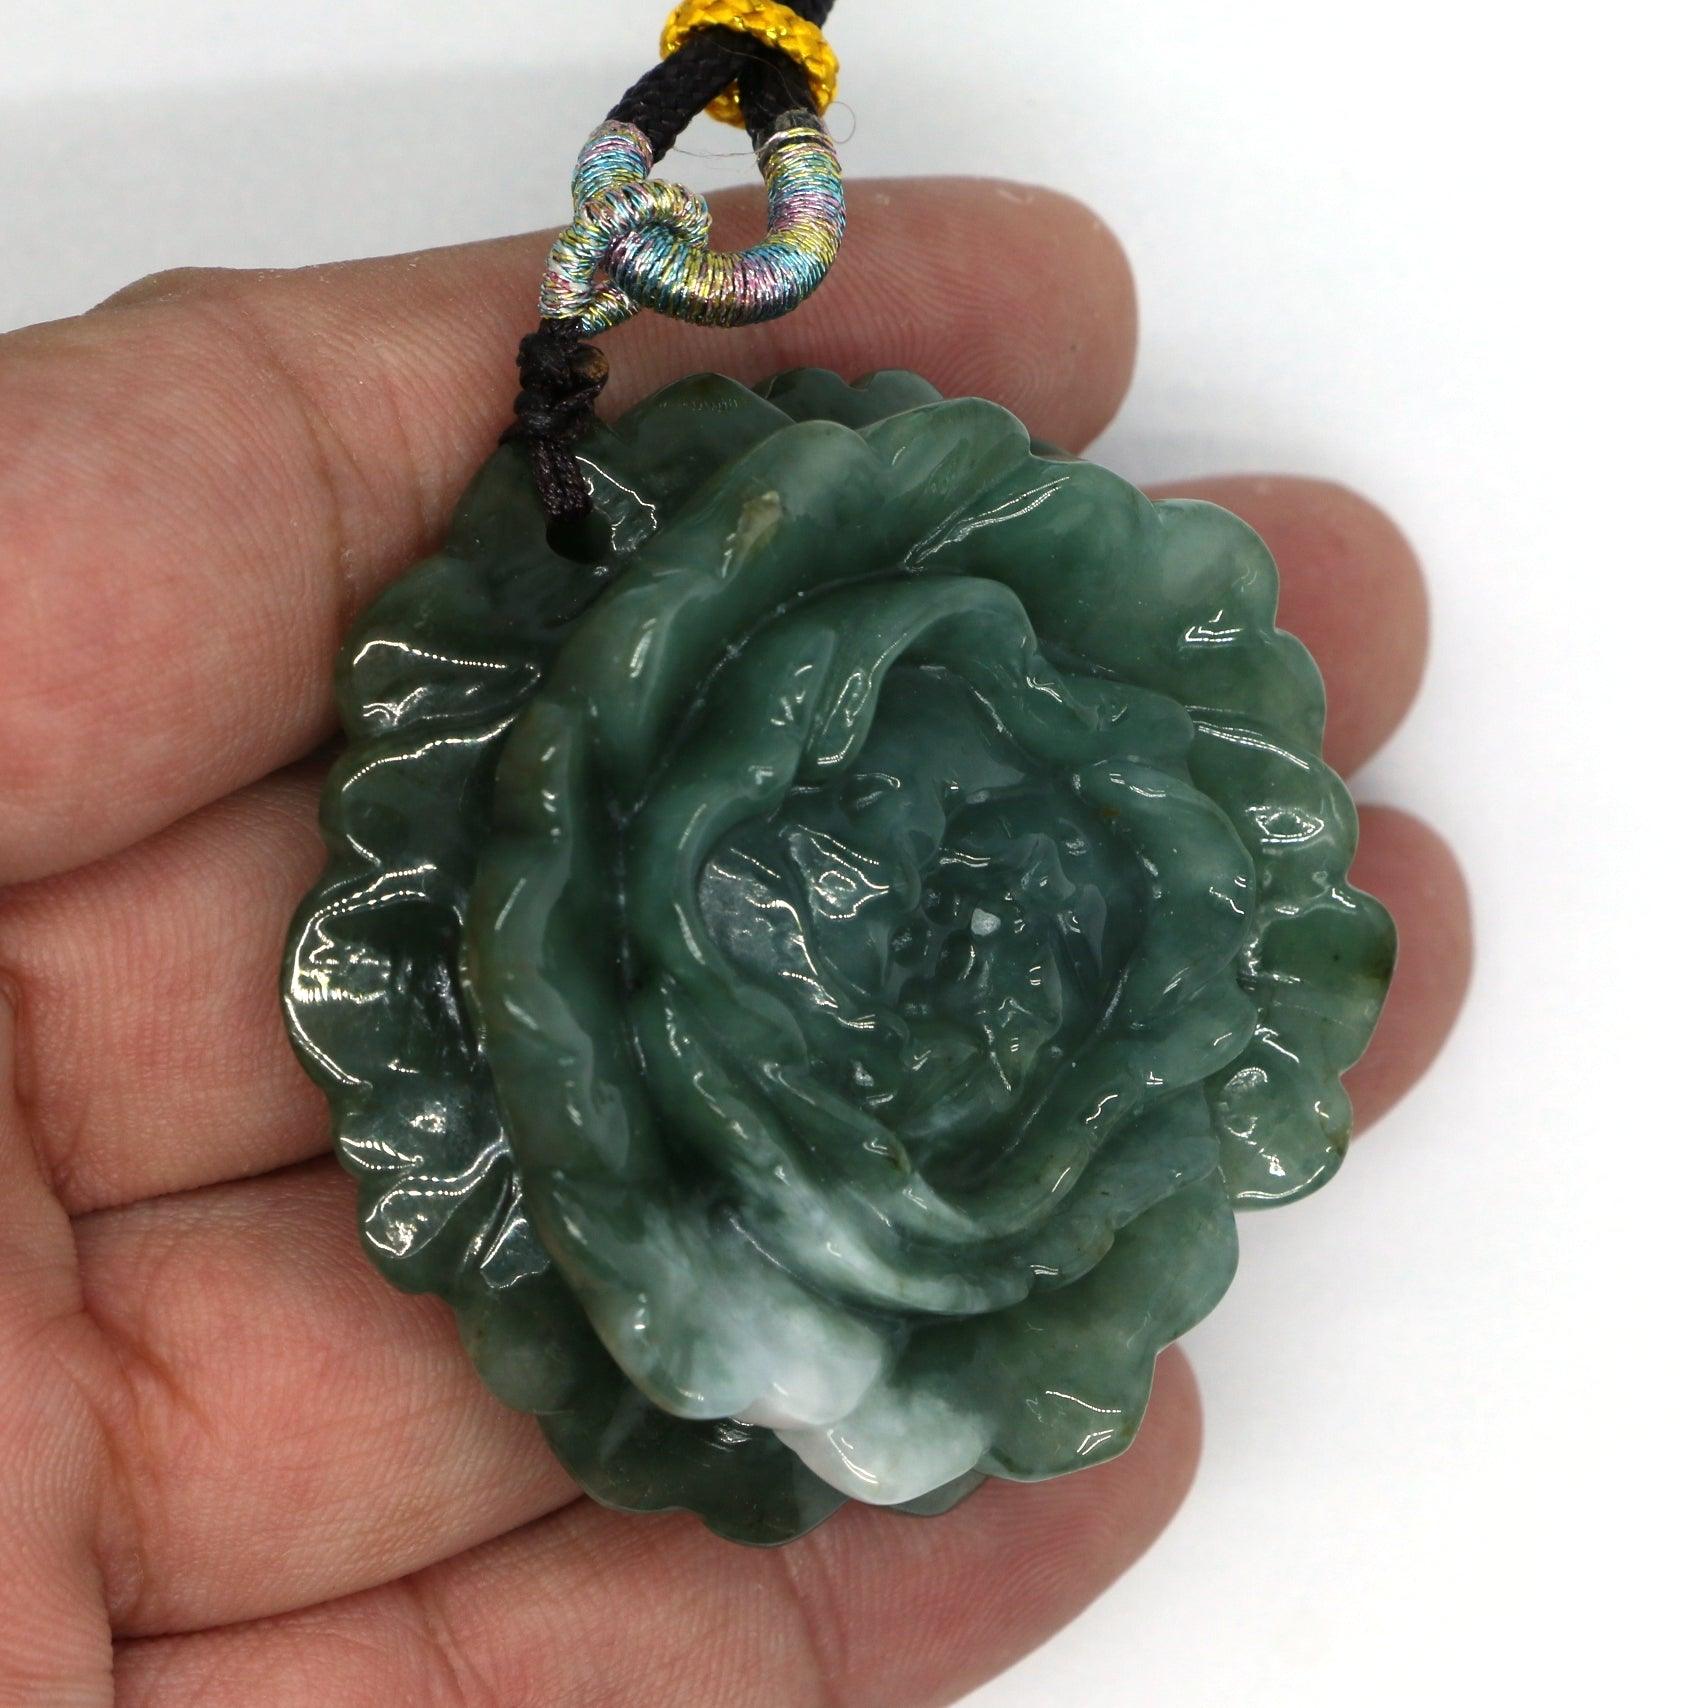 Type A Jadeite Jade Flower Pendants(Fullfill USA) B09BLRSXD6 - Jade-collector.com